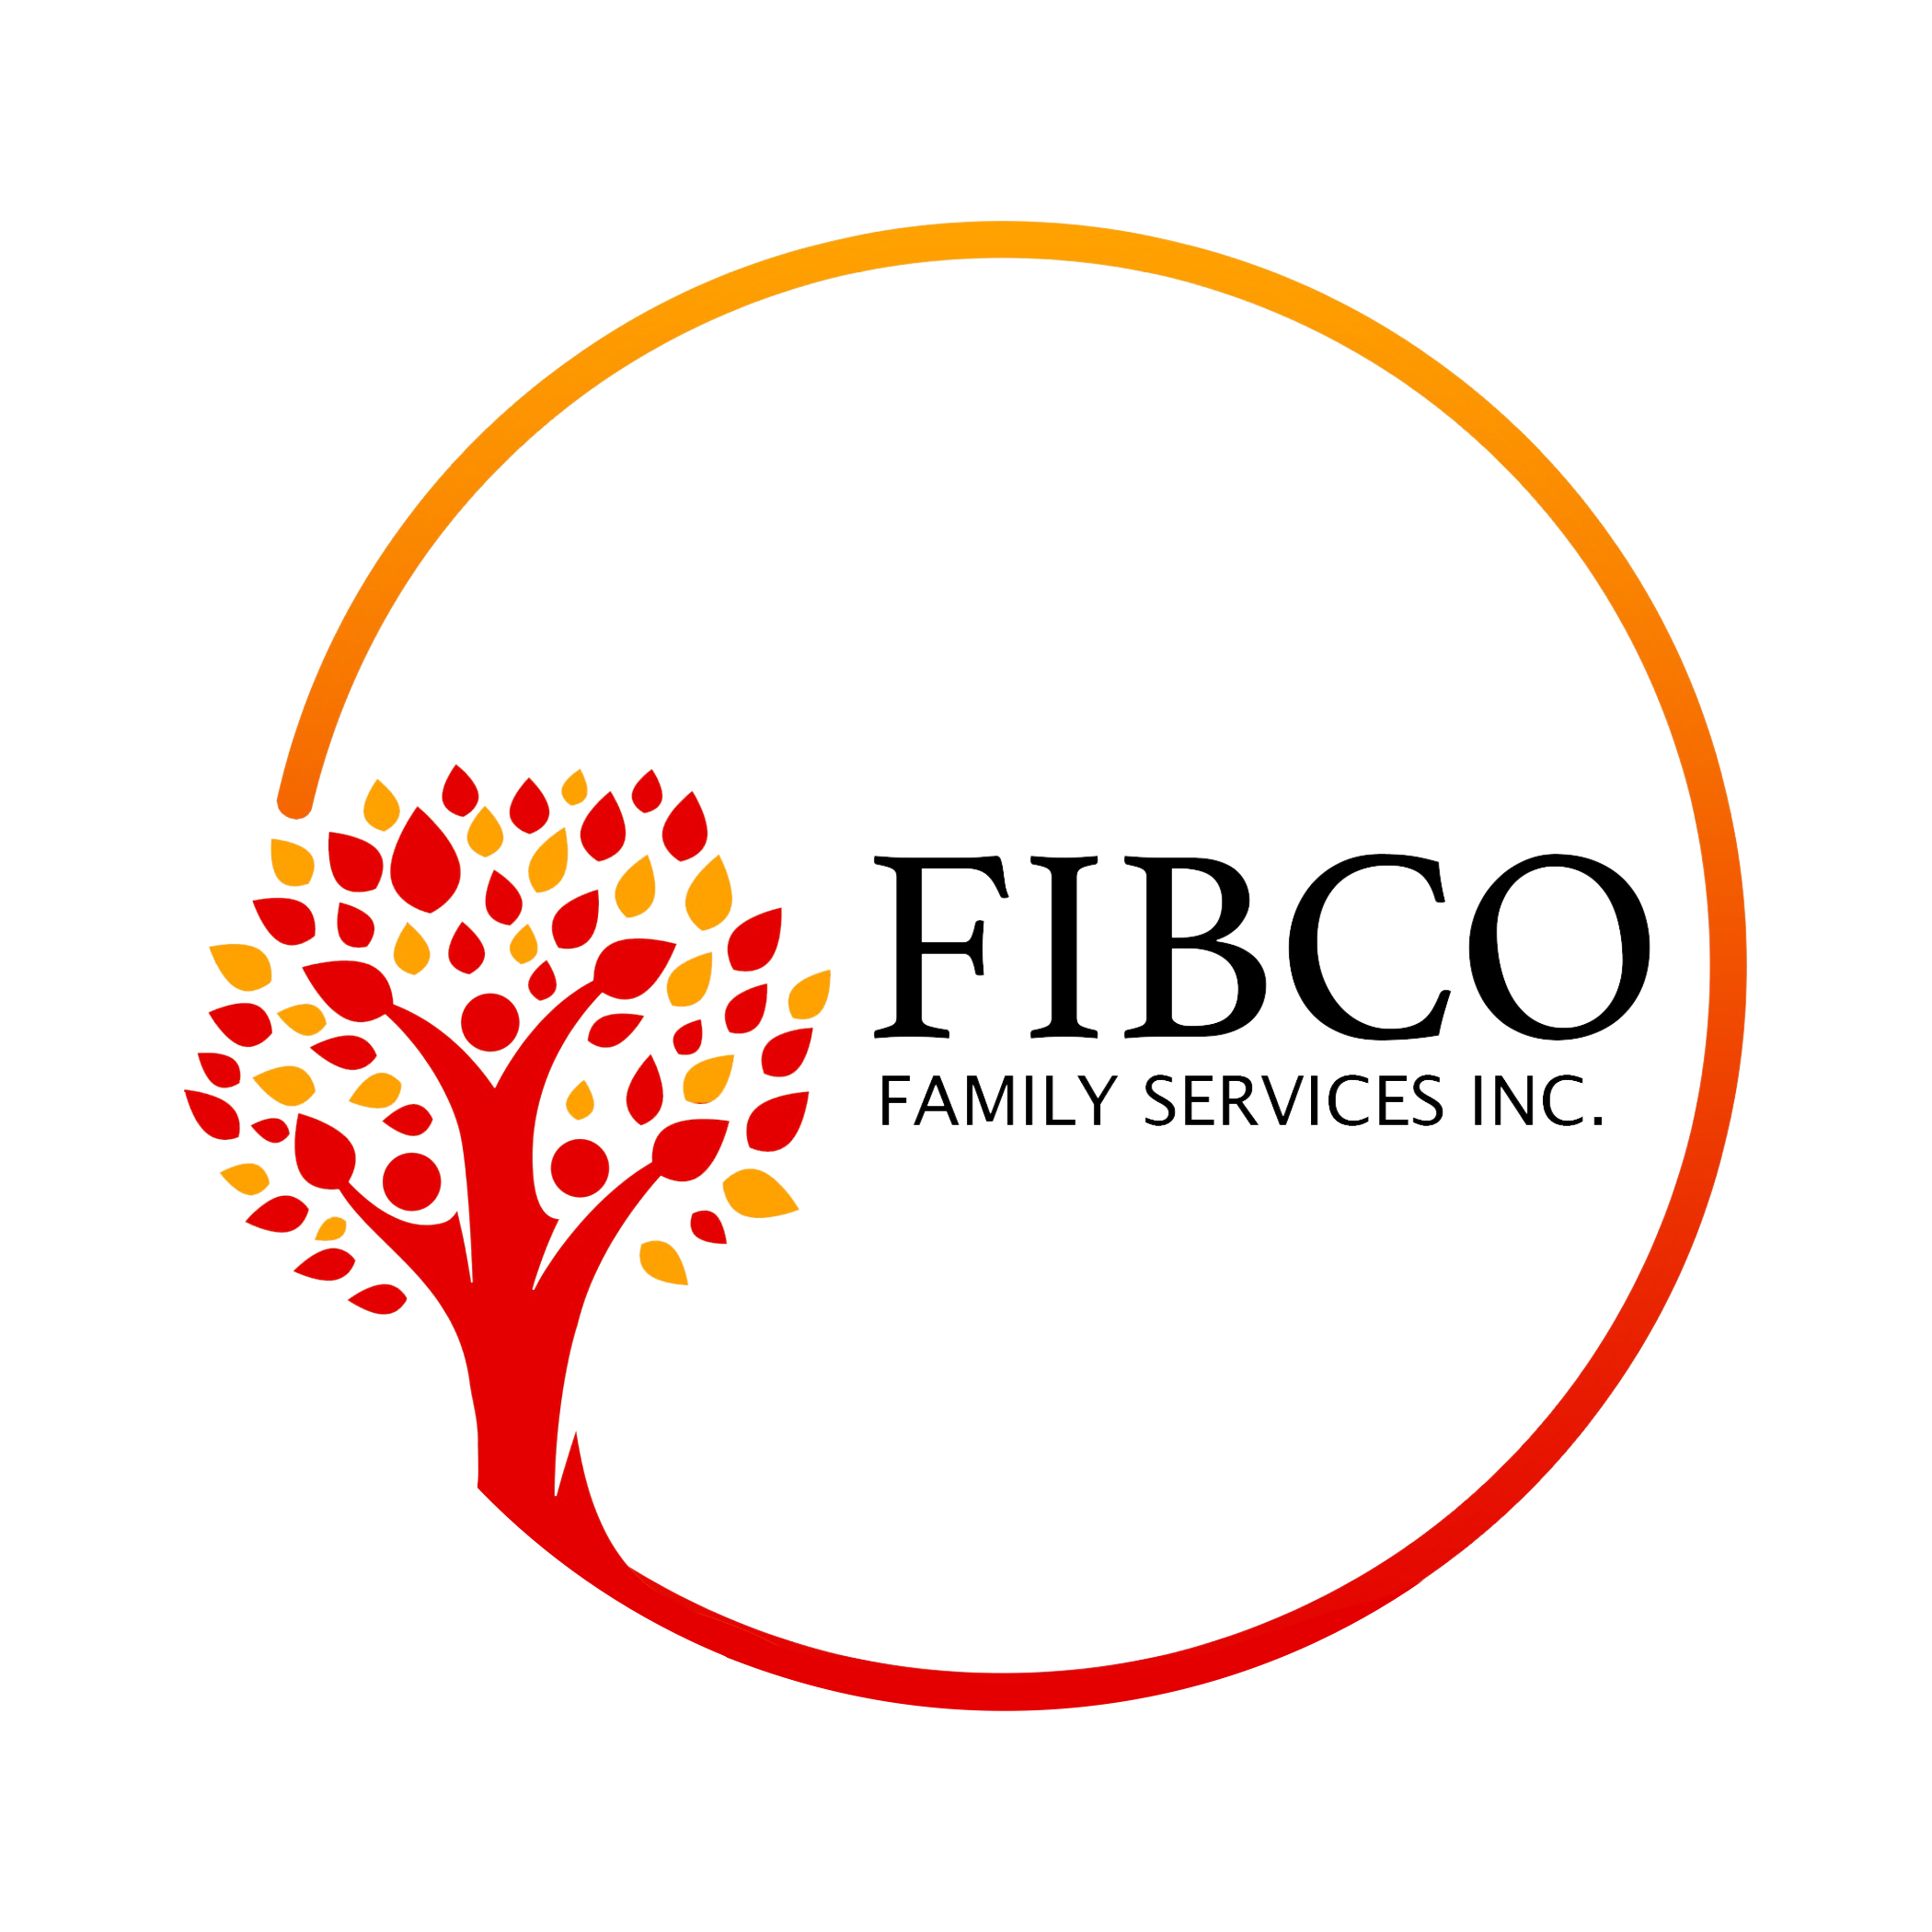 FIBCO Family Services, Inc.